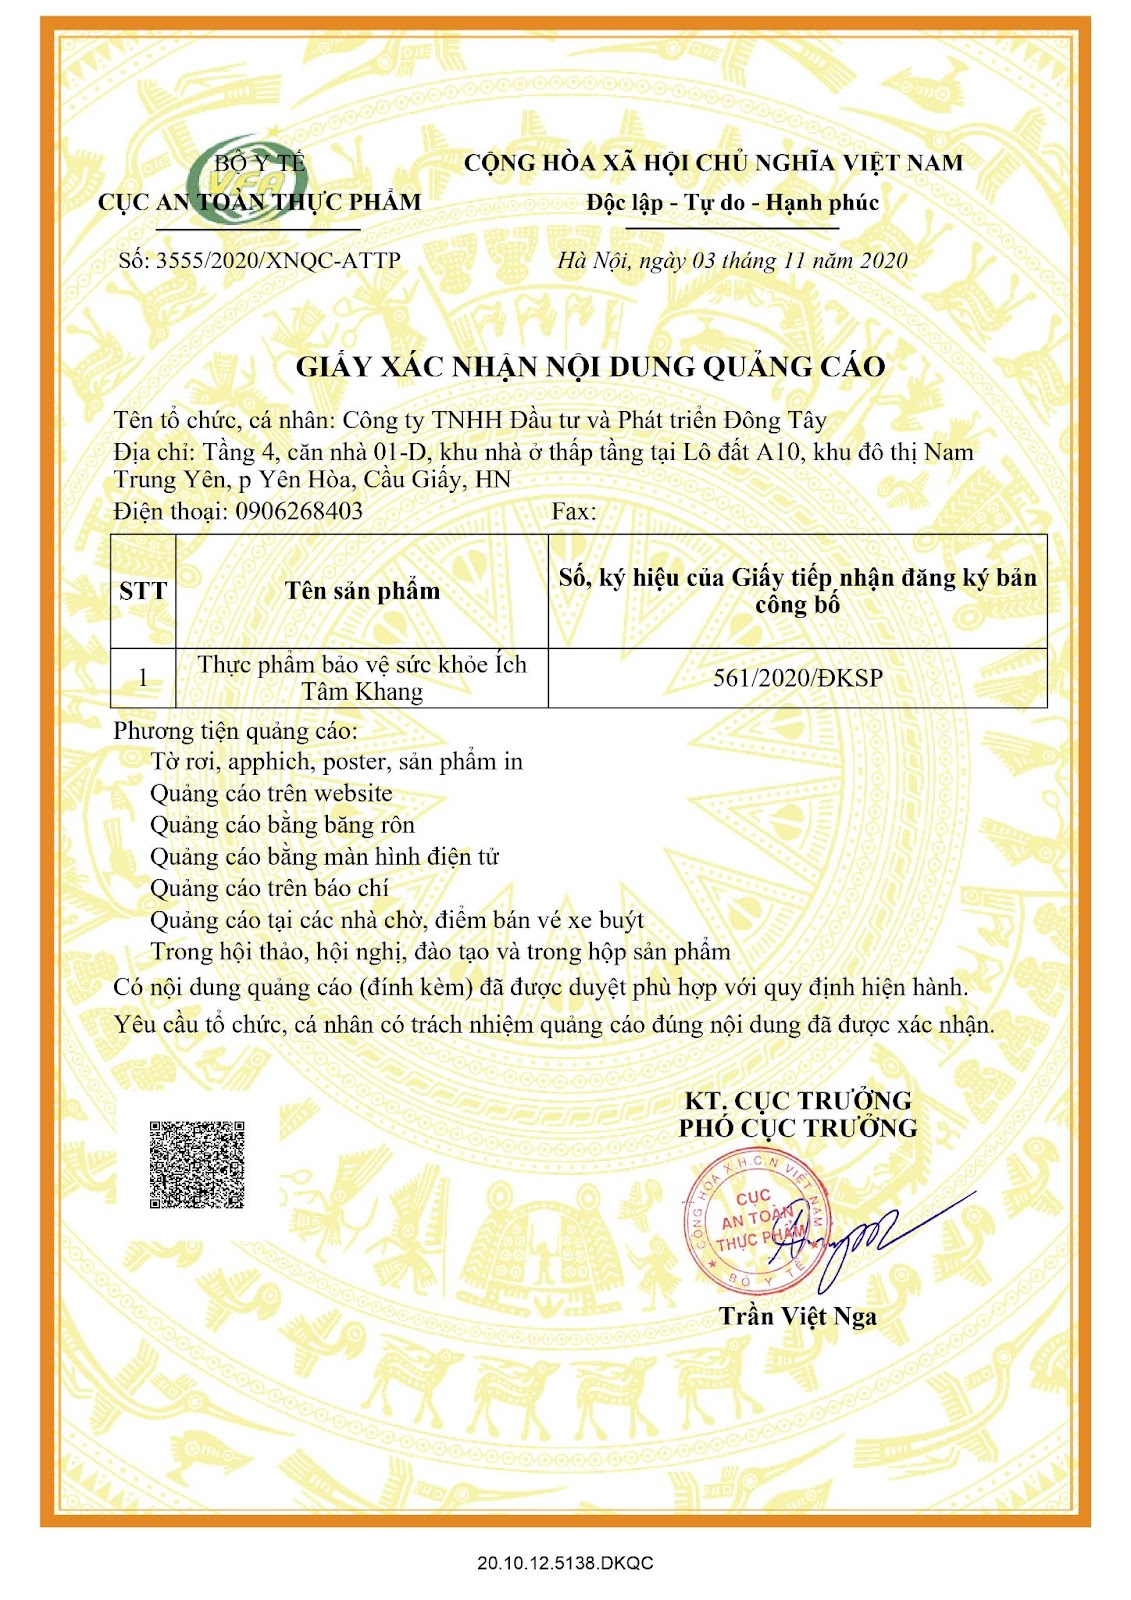 Ich-Tam-Khang-duoc-cap-phep-quang-cao-theo-so-xac-nhan-3555-2020-XNQC-ATTP